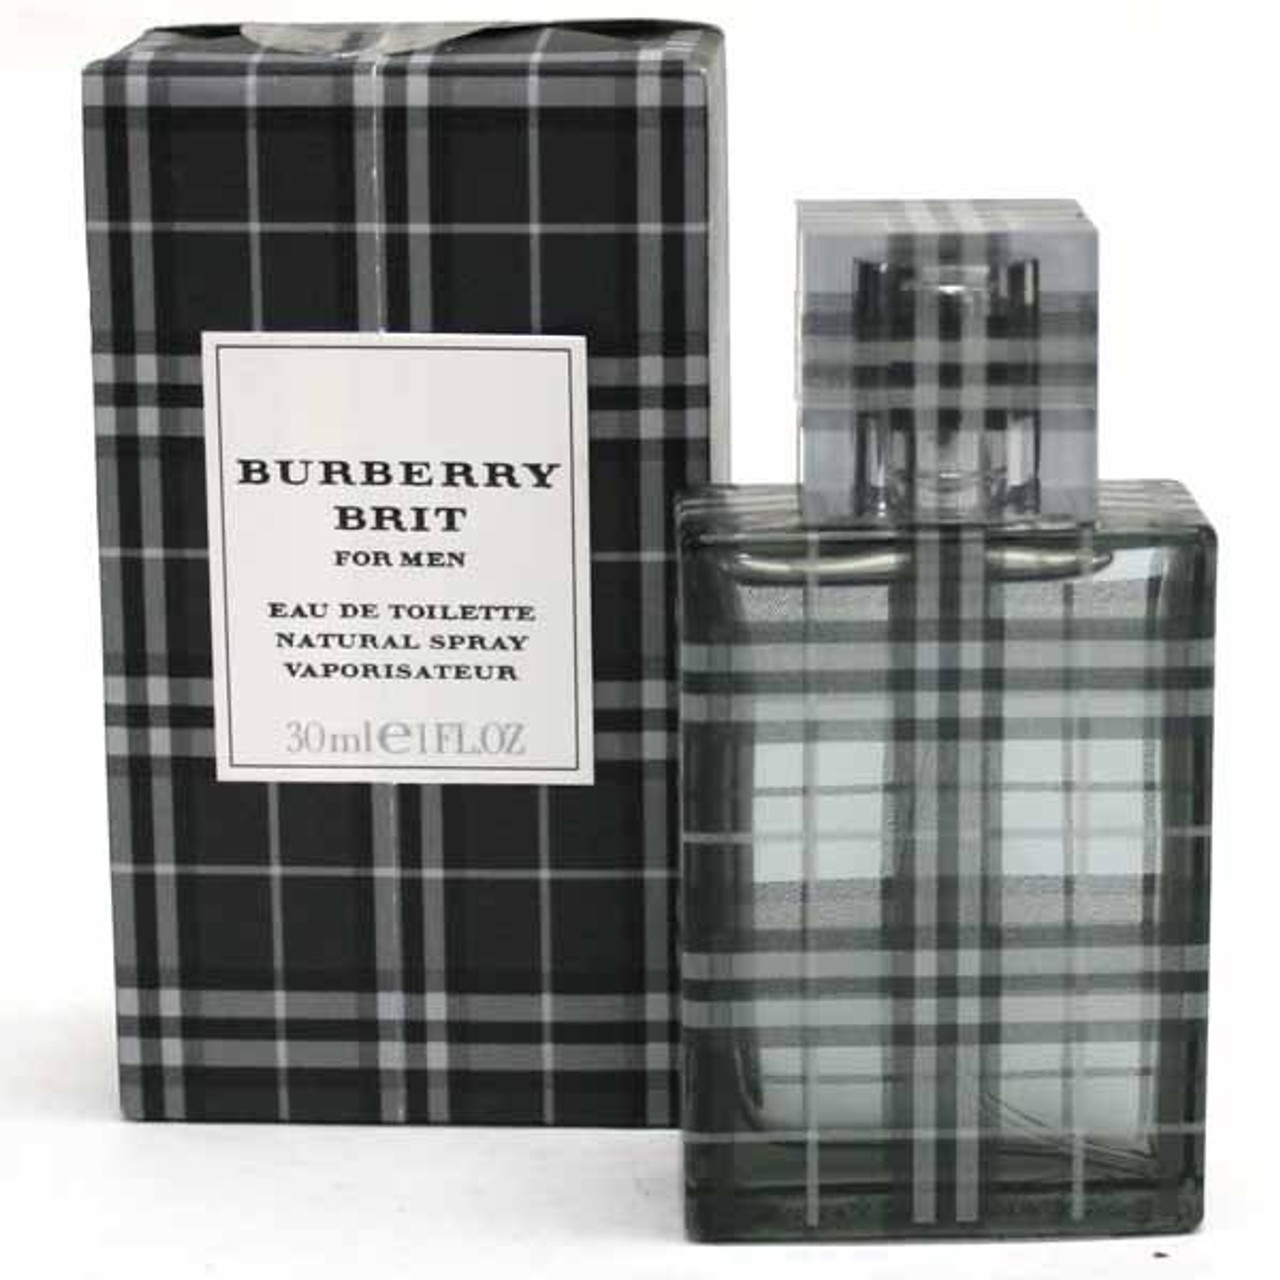 burberry fragrances